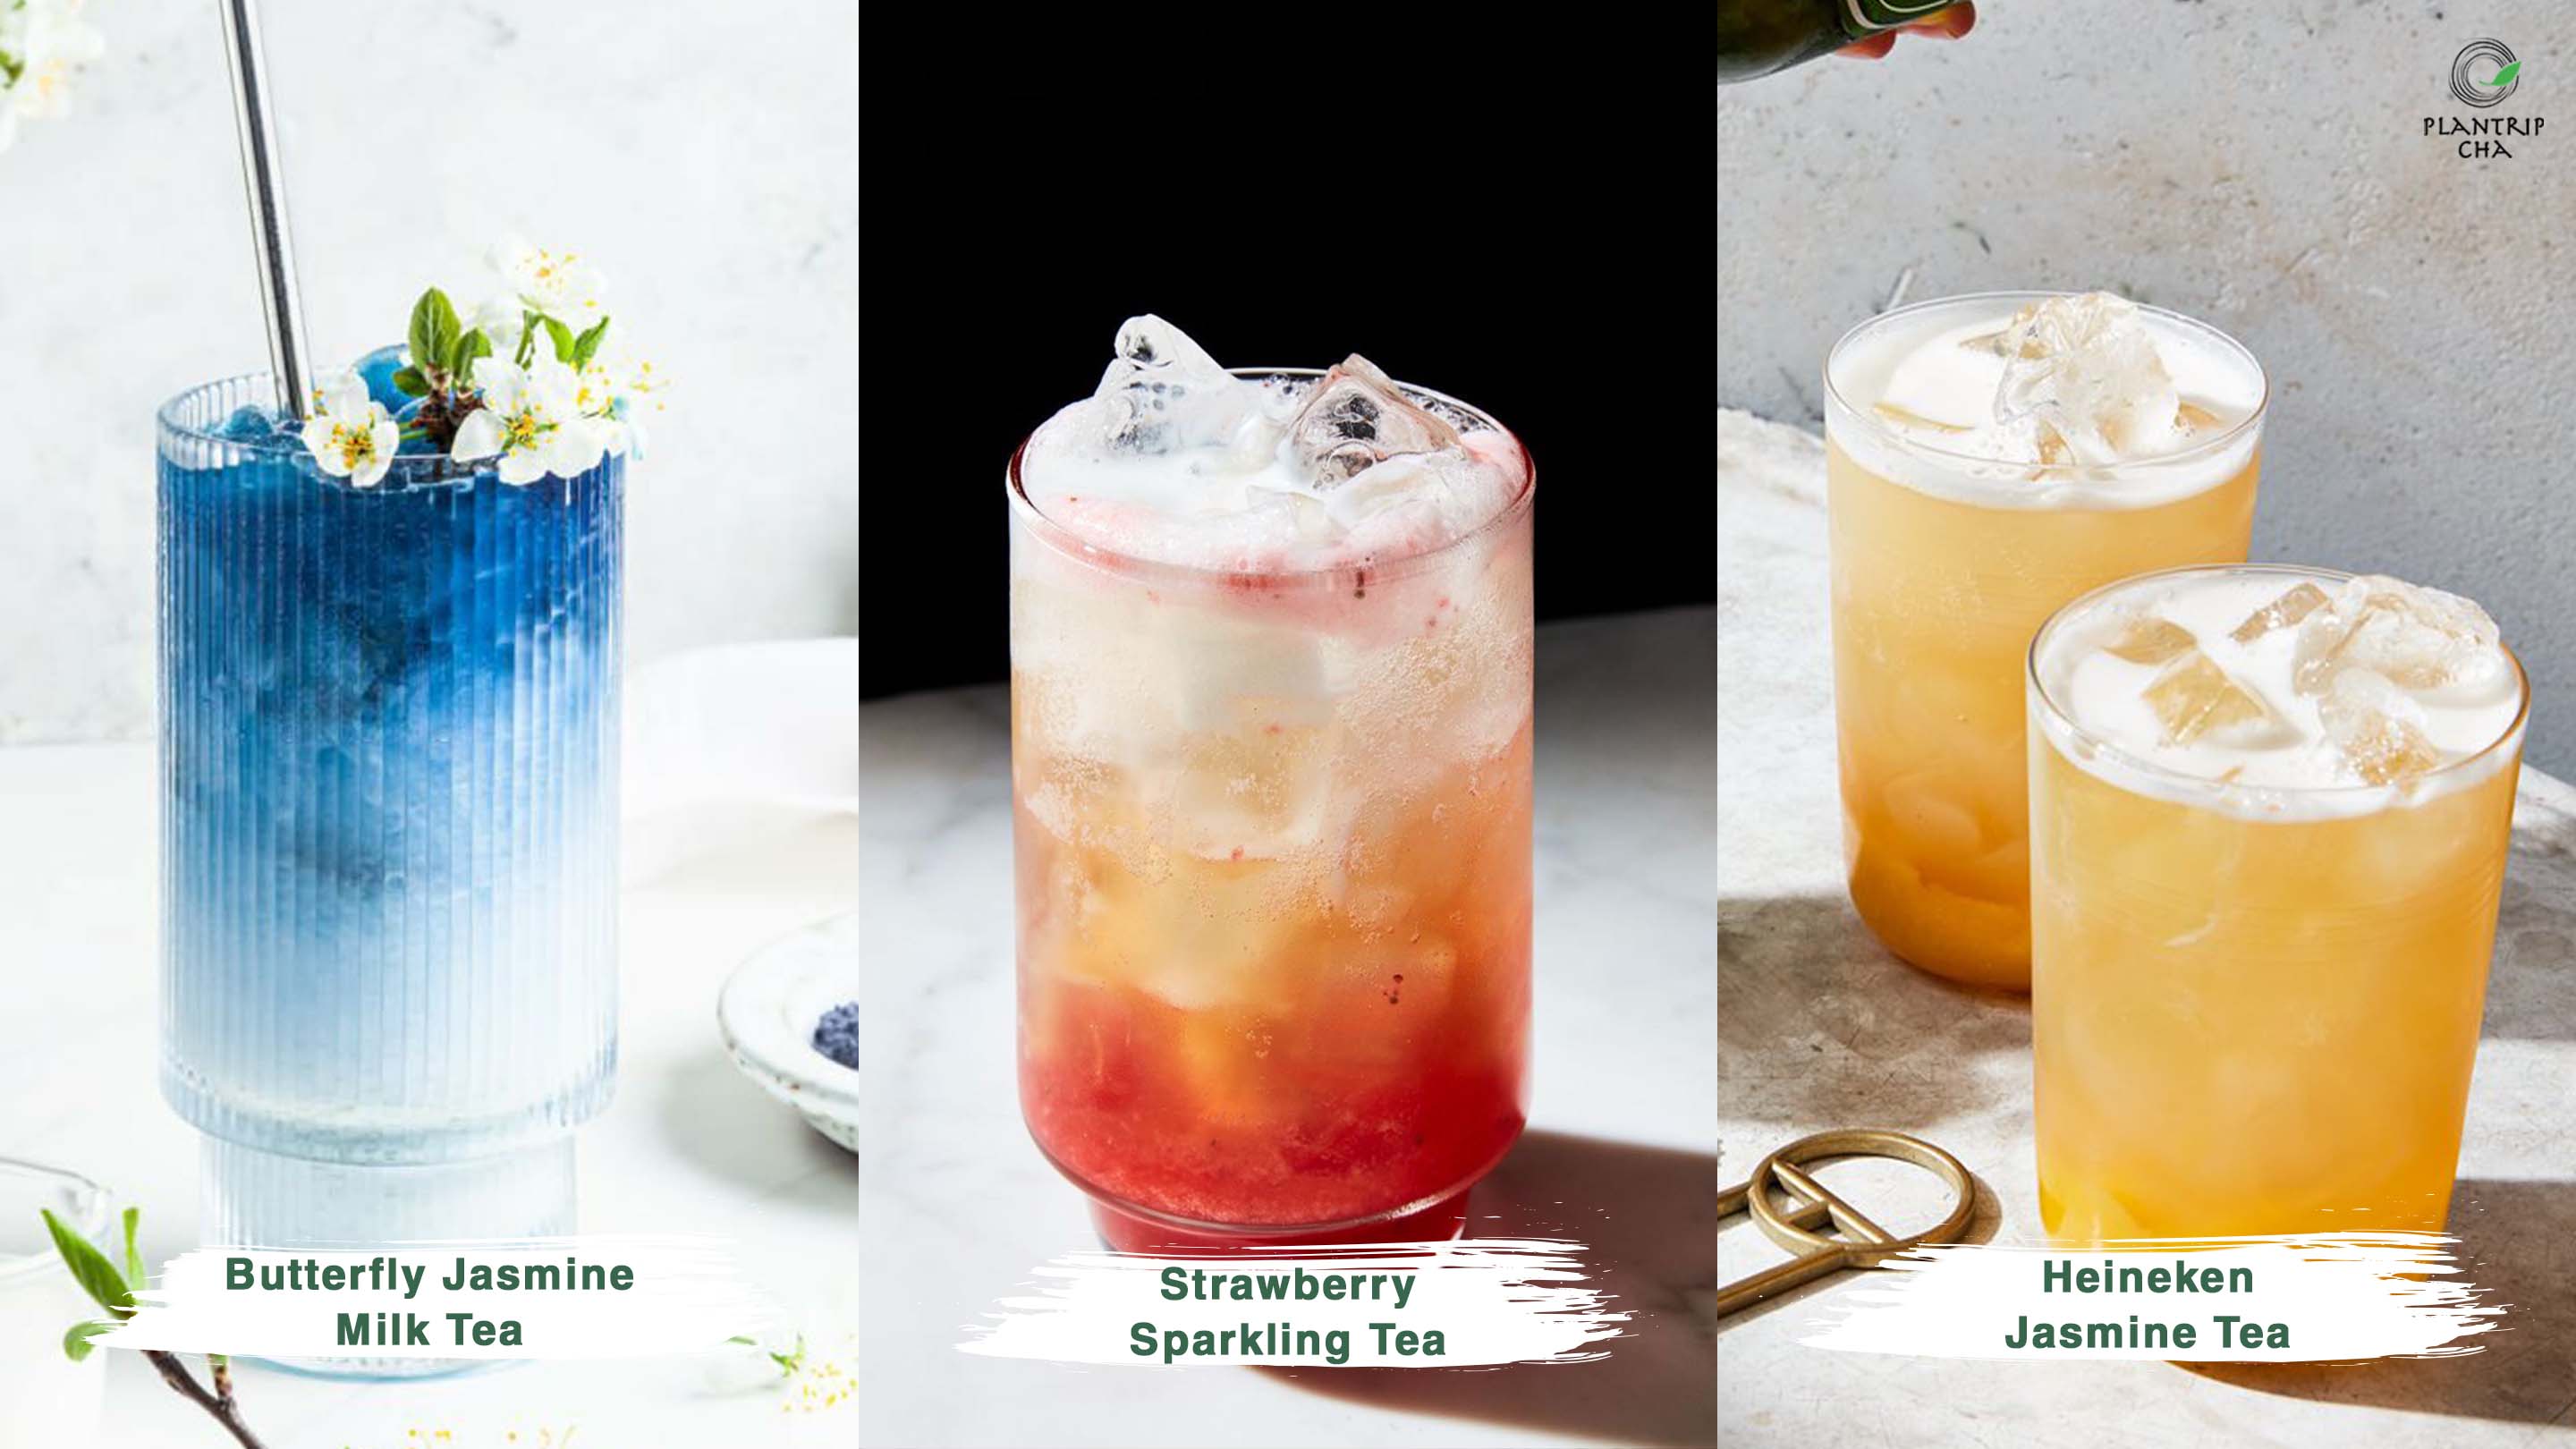 Các tuyệt phẩm làm từ Trà Xanh Lài Butterfly Jasmine Milk Tea, Strawberry Sparkling Tea, Heineken Jasmine Tea.